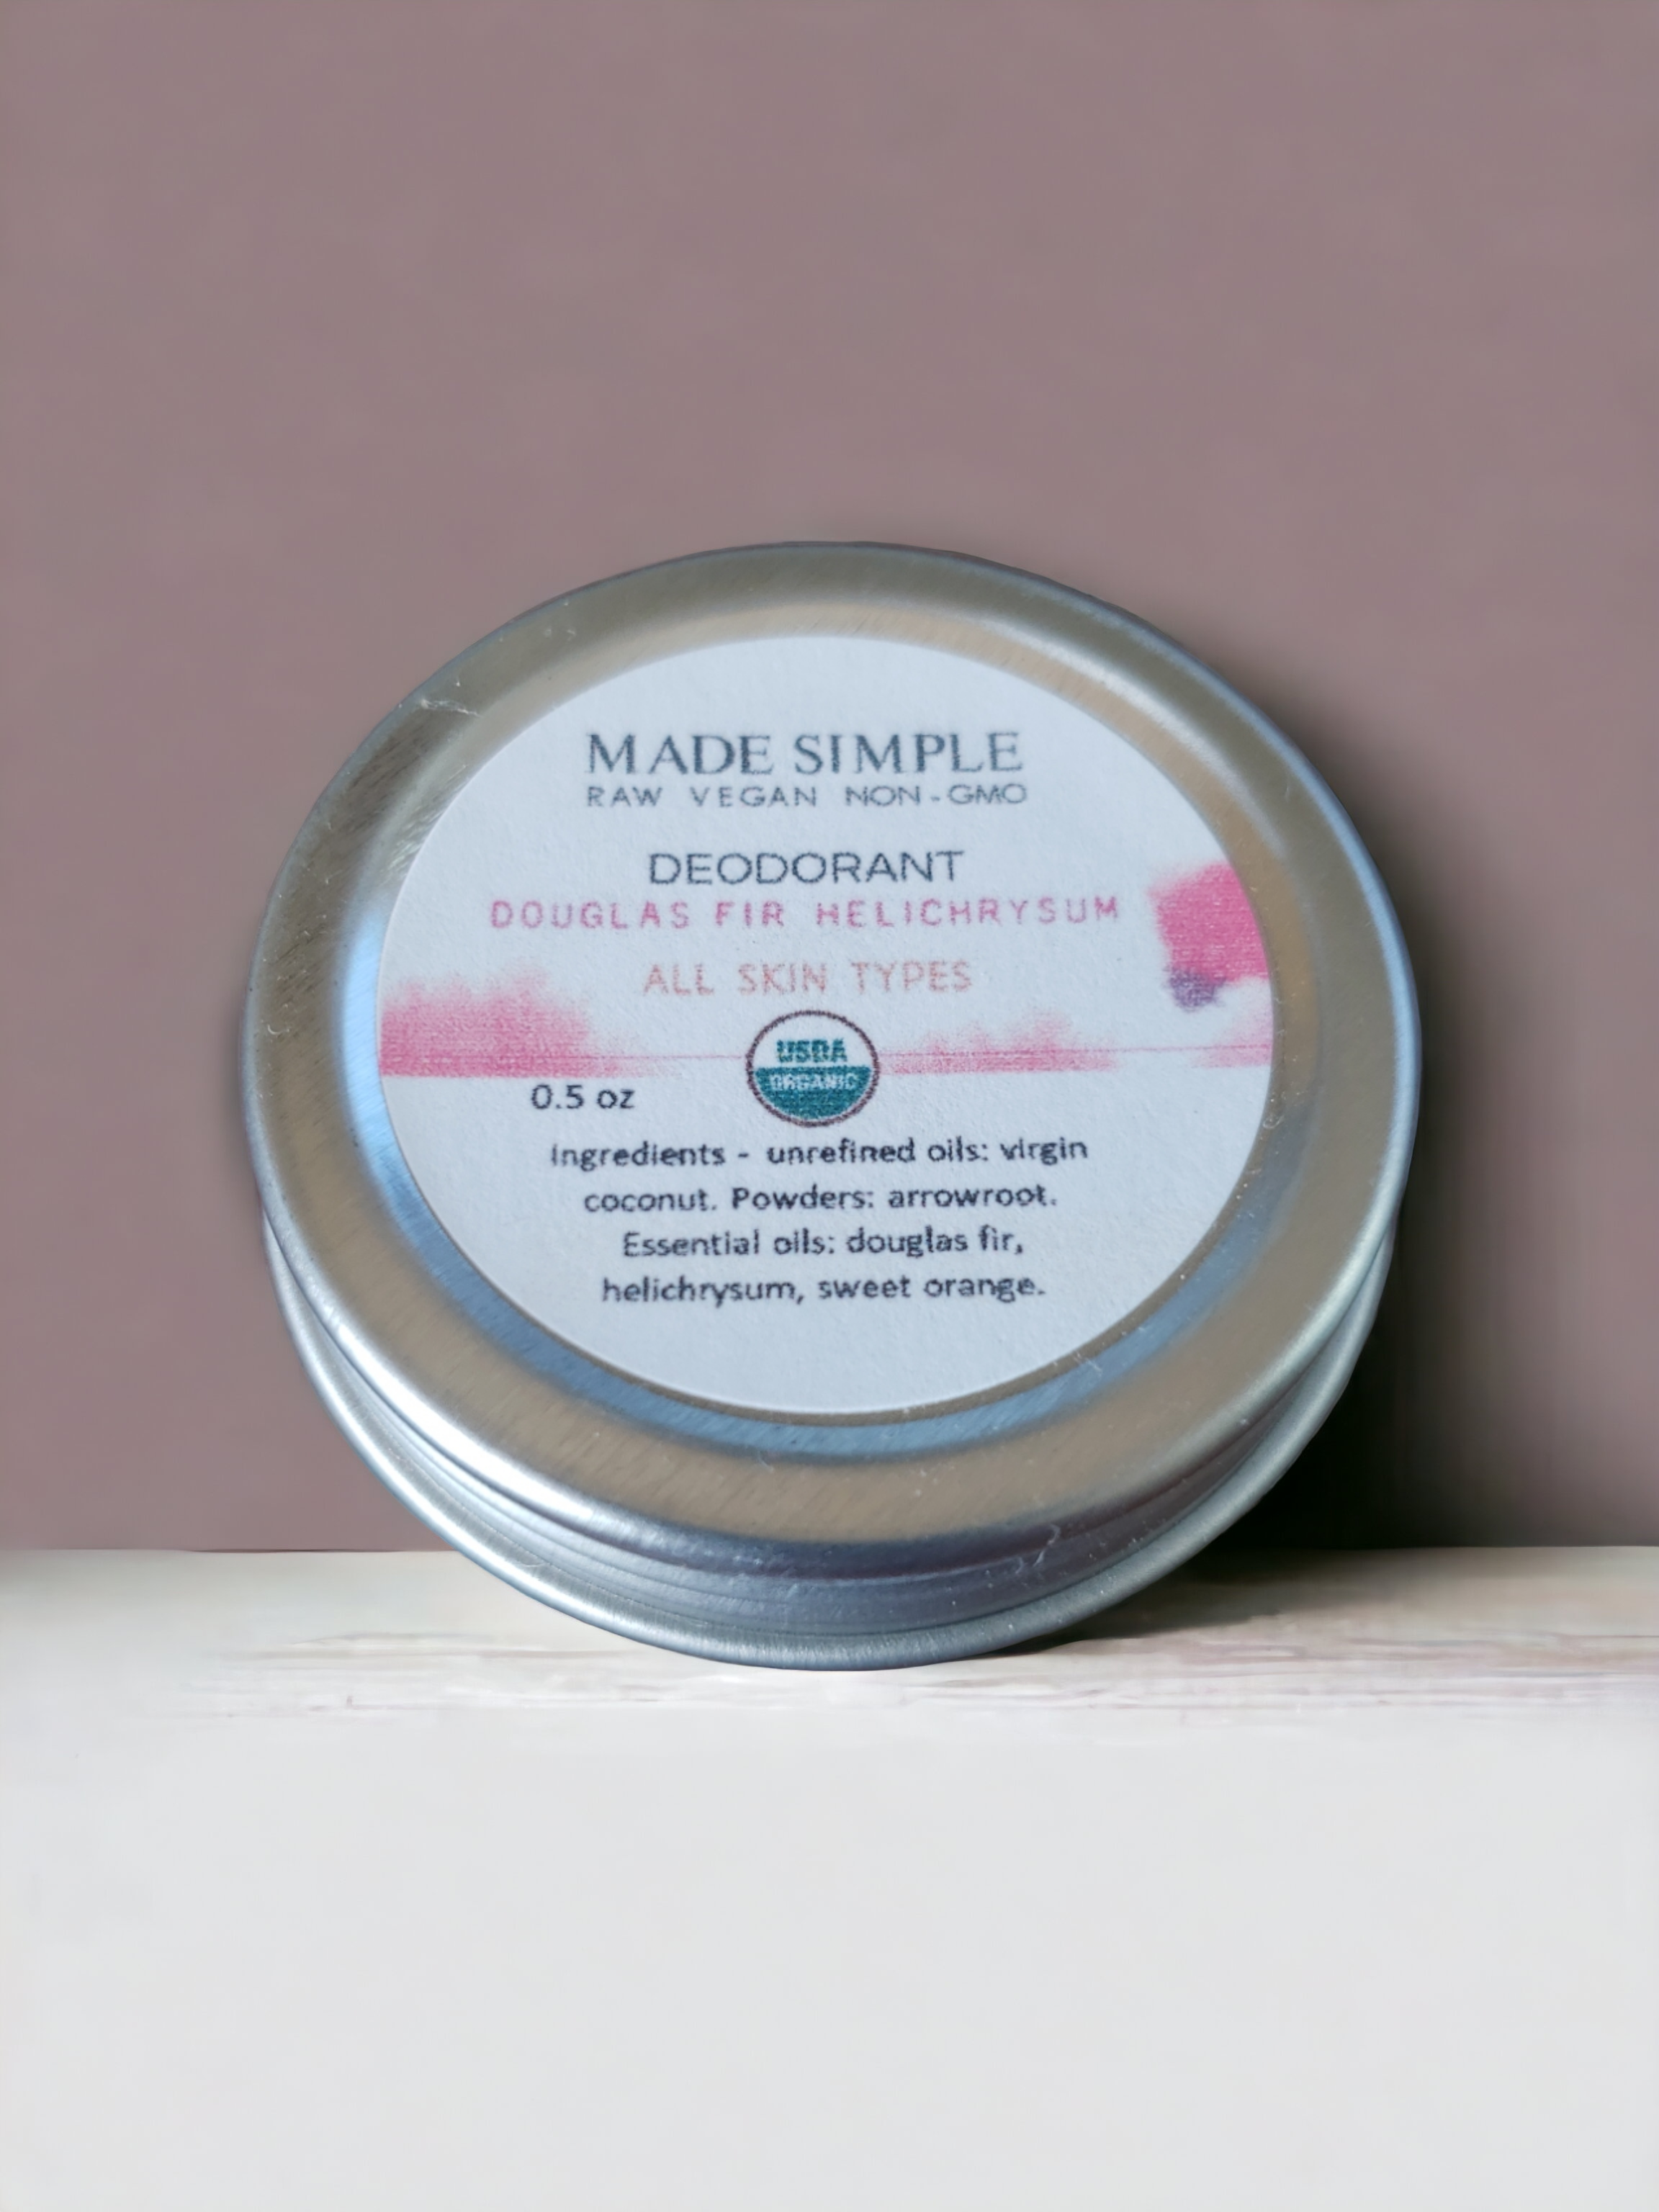 Made Simple Skin Care - Douglas Fir Helichrysum Deodorant usda certified organic raw vegan nonGMO sample